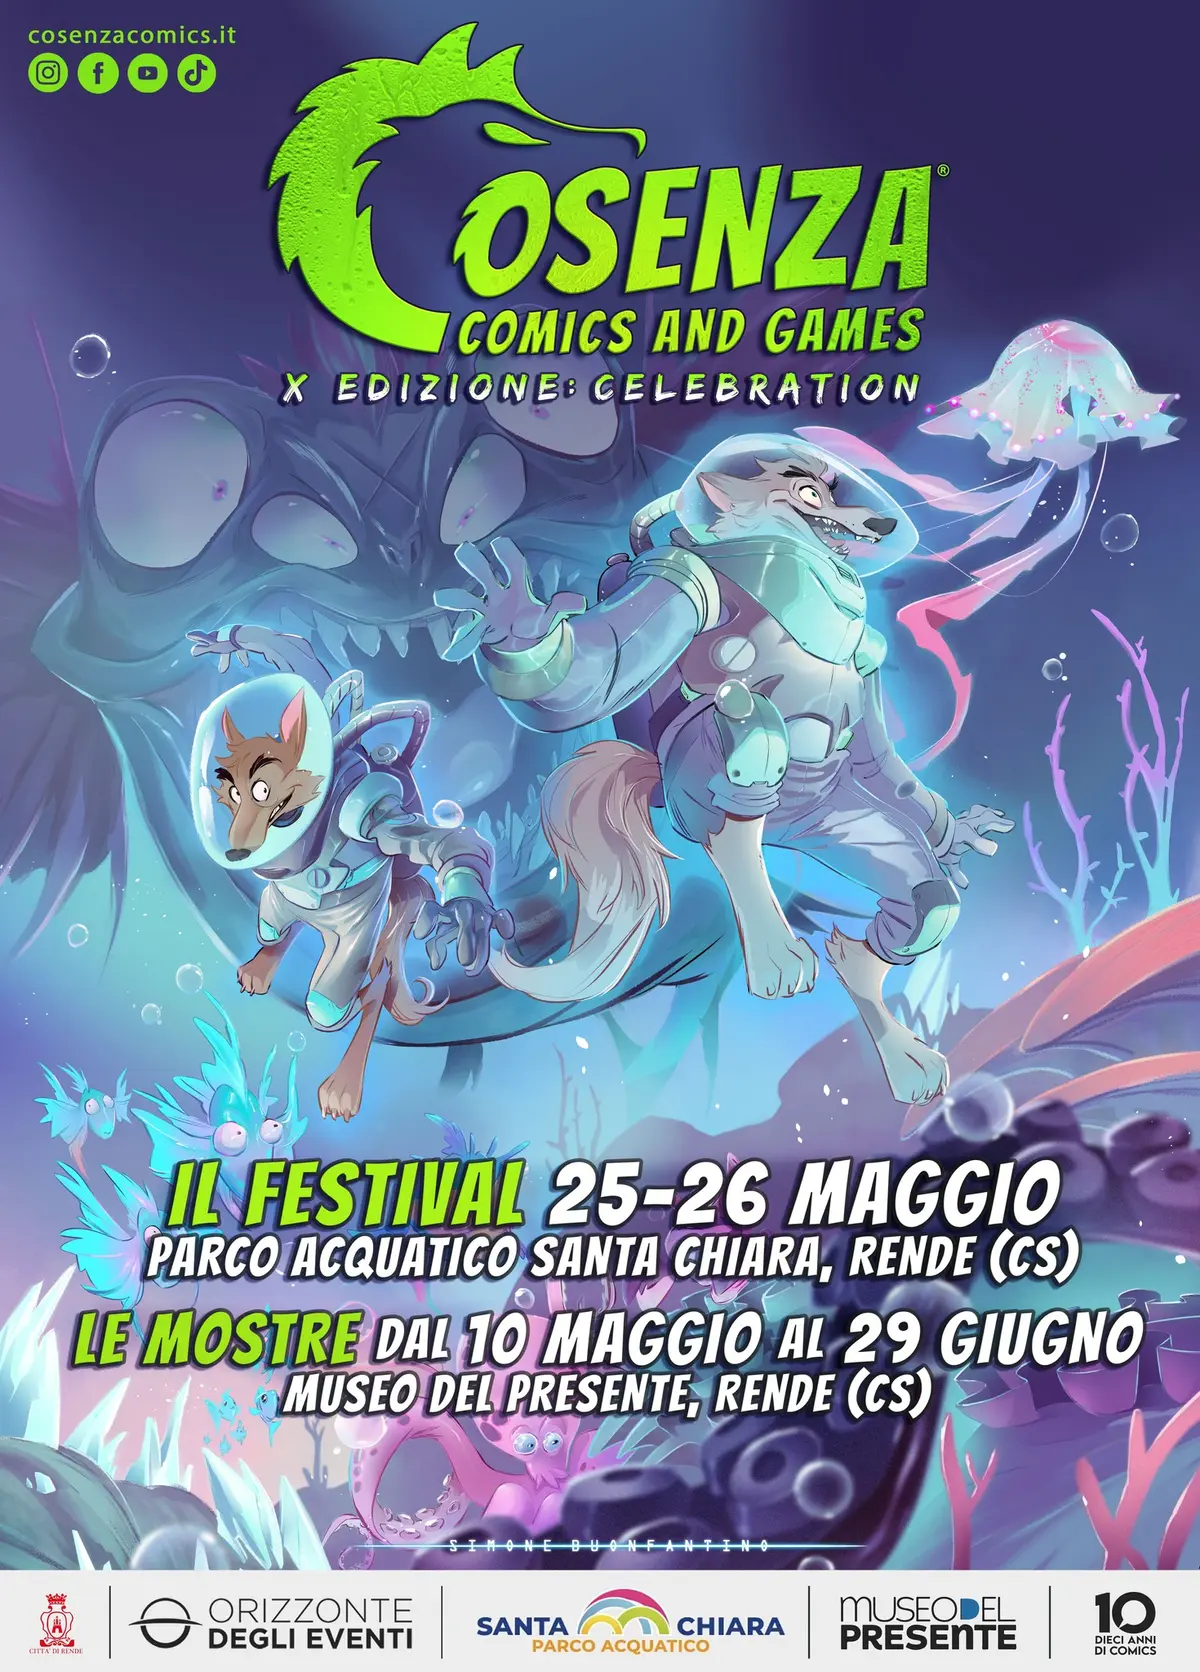 Cosenza comics and games